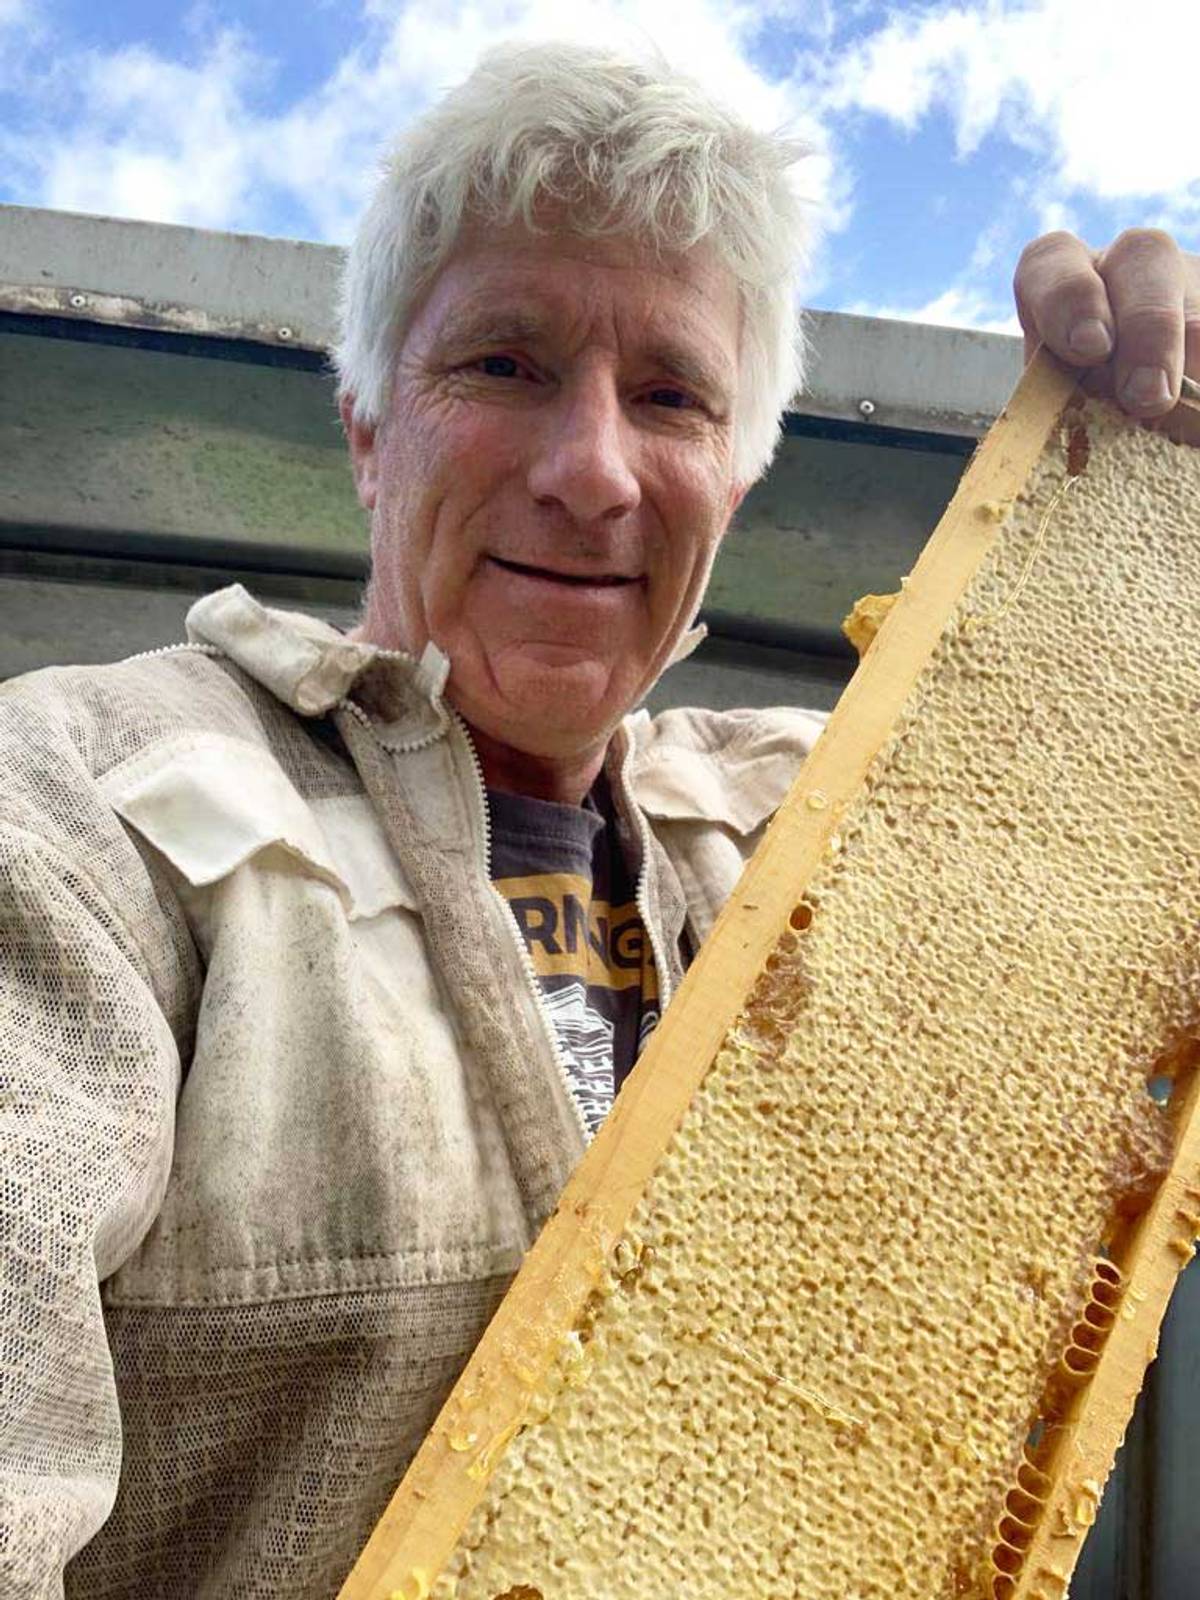 Jonathan Landes harvesting honey. On average, each hive produces around 22 pounds of honey per season.